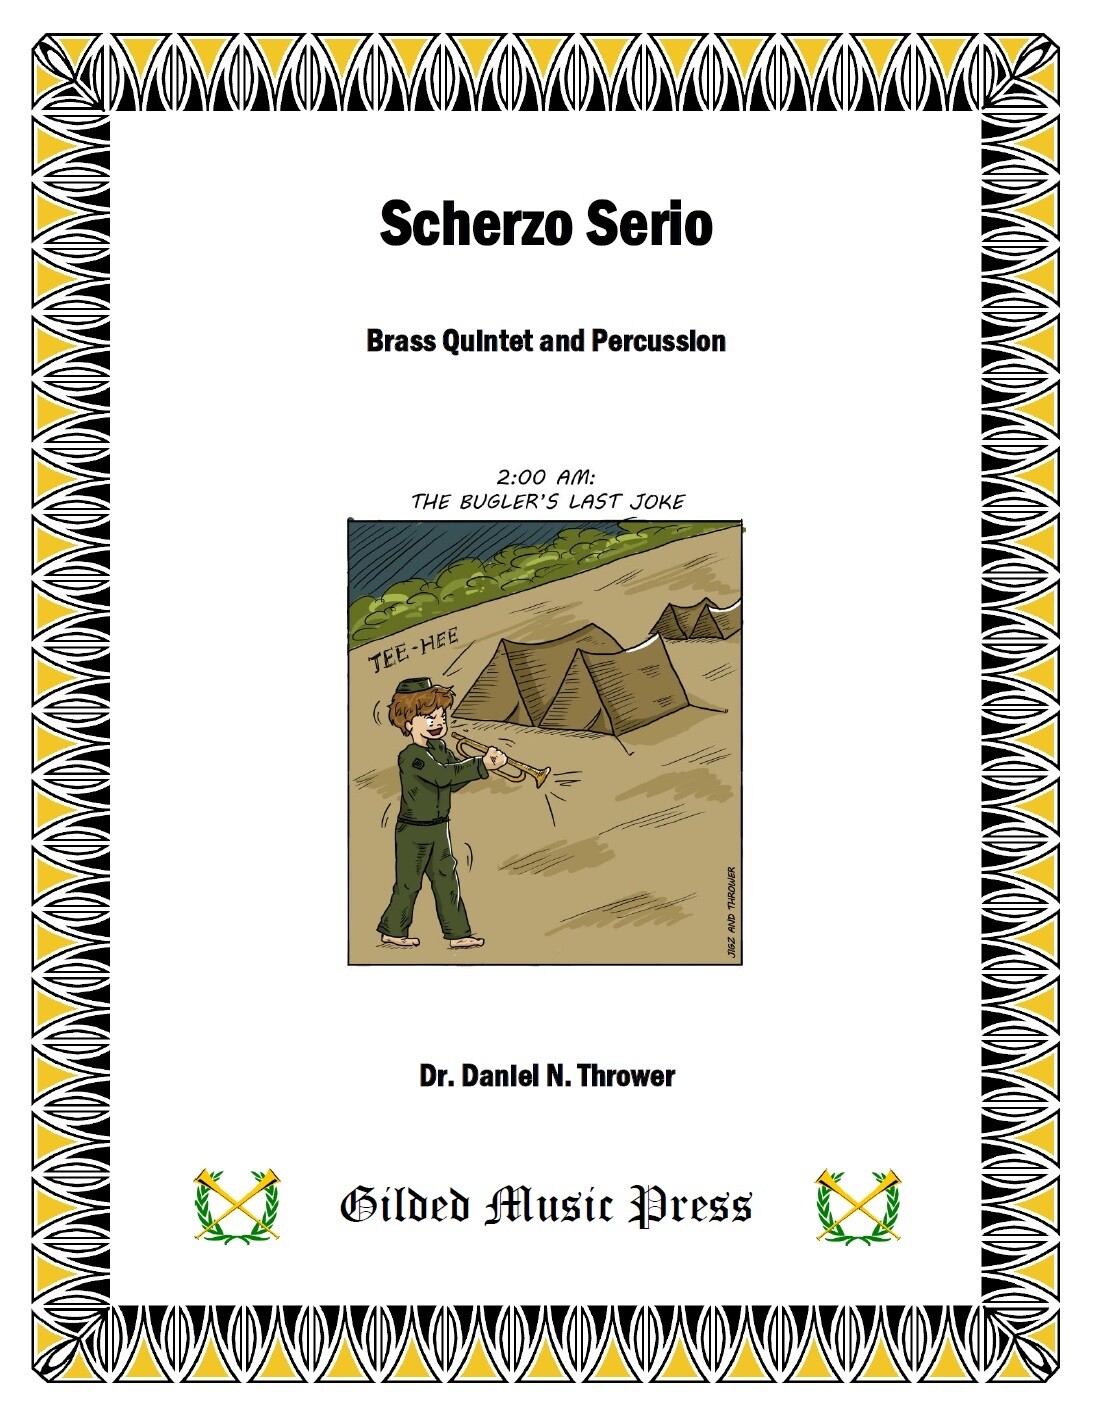 GMP 3003: Scherzo Serio (Brass Quintet & Optional Percussion), Dr. Daniel Thrower